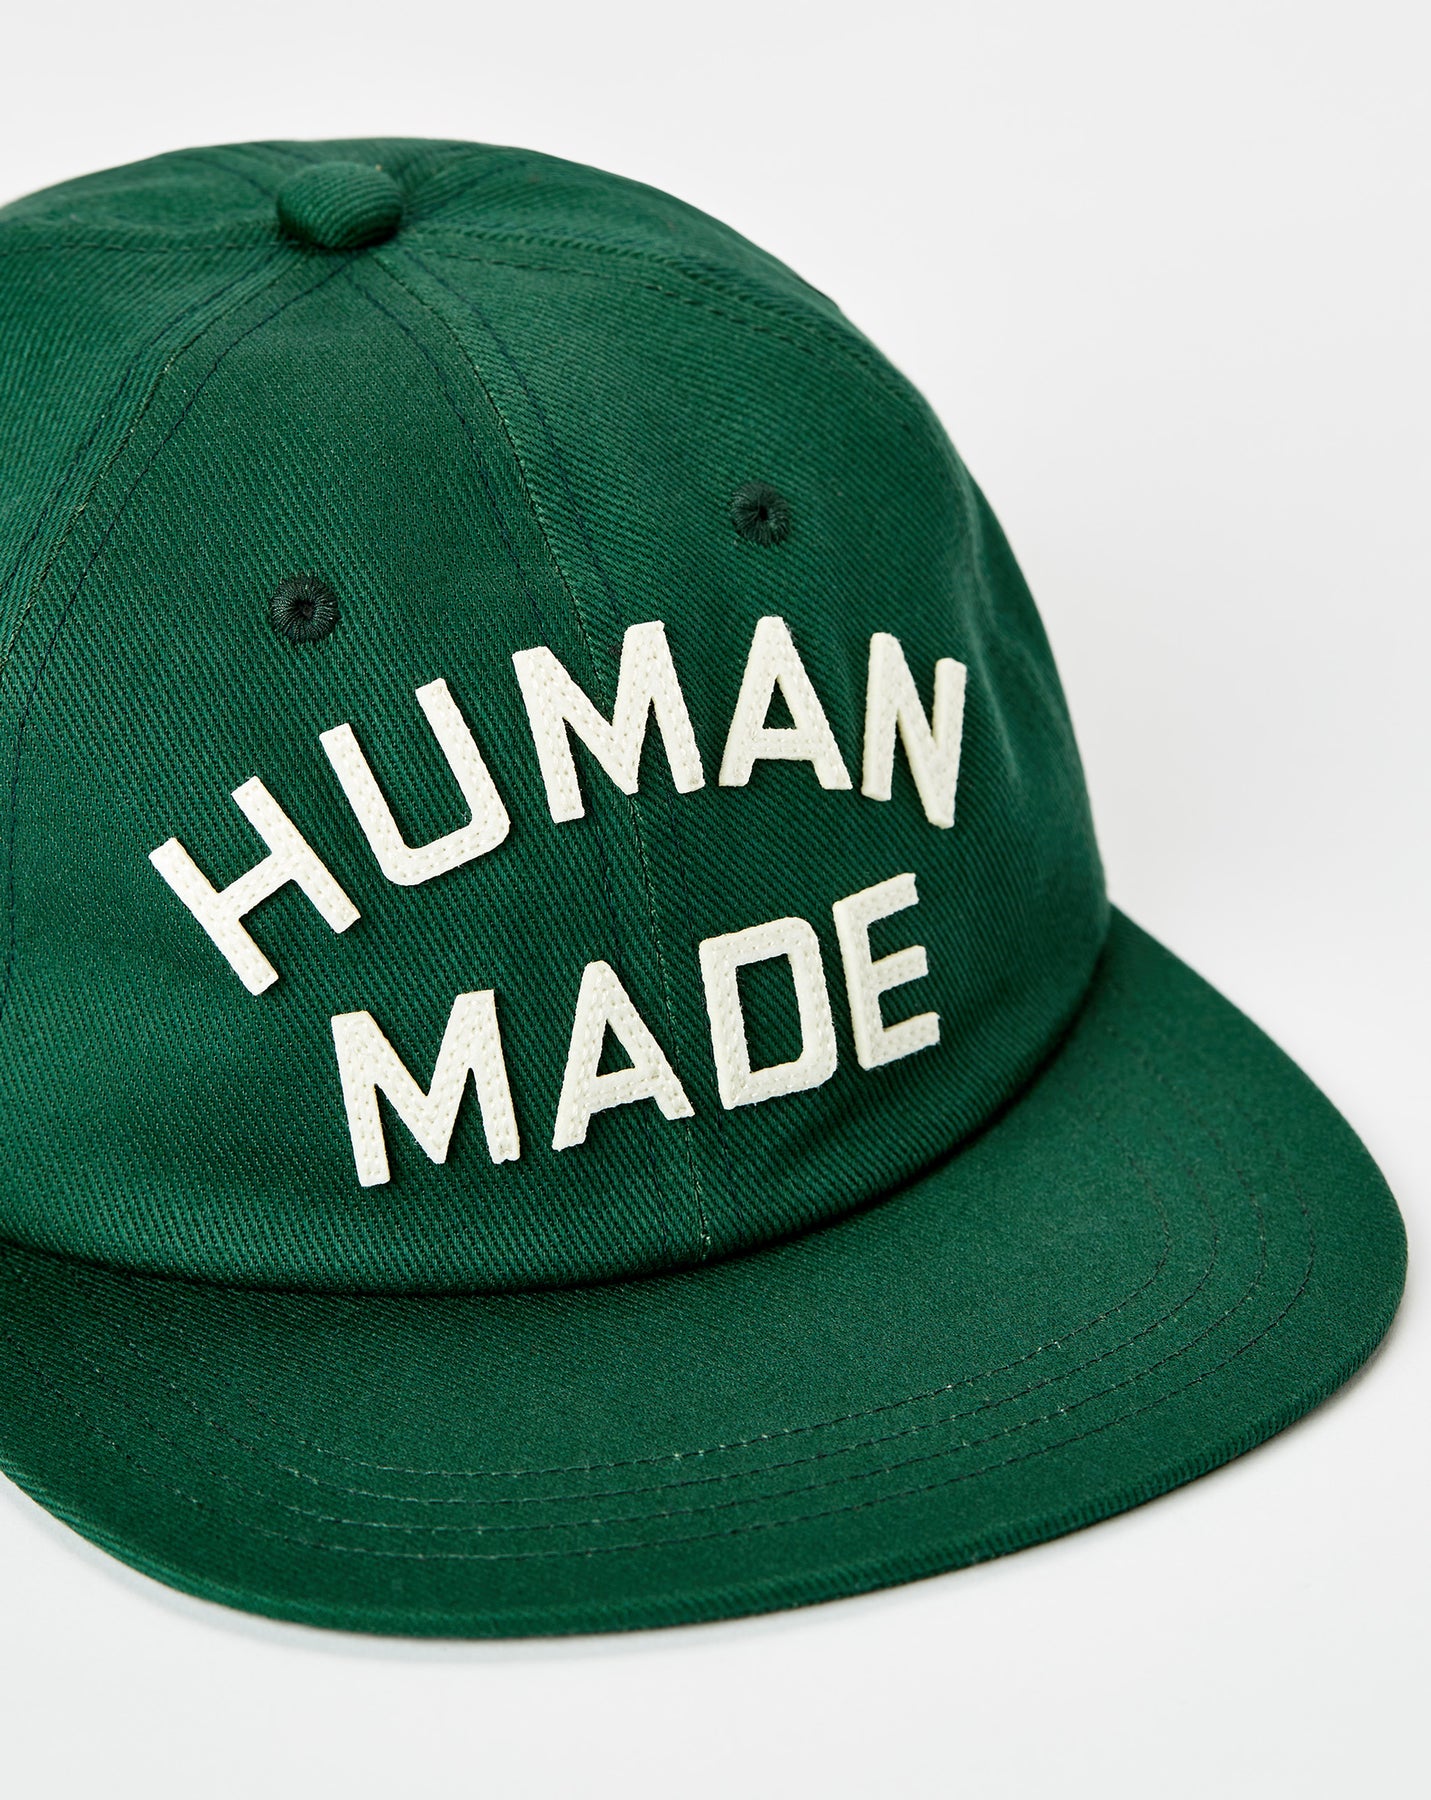 HUMAN MADE BASEBALL CAP GREEN